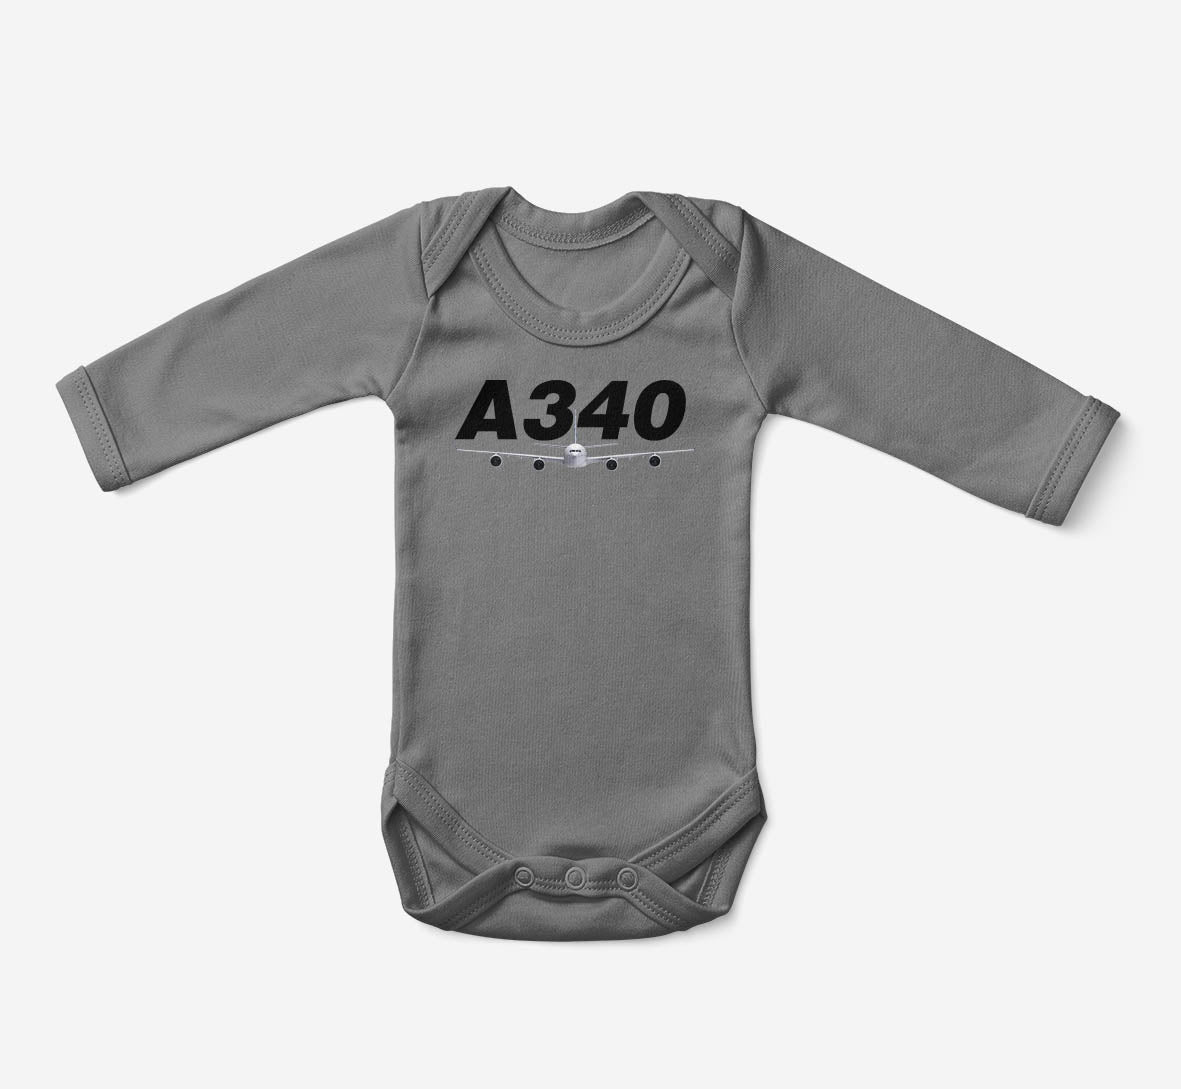 Super Airbus A340 Designed Baby Bodysuits